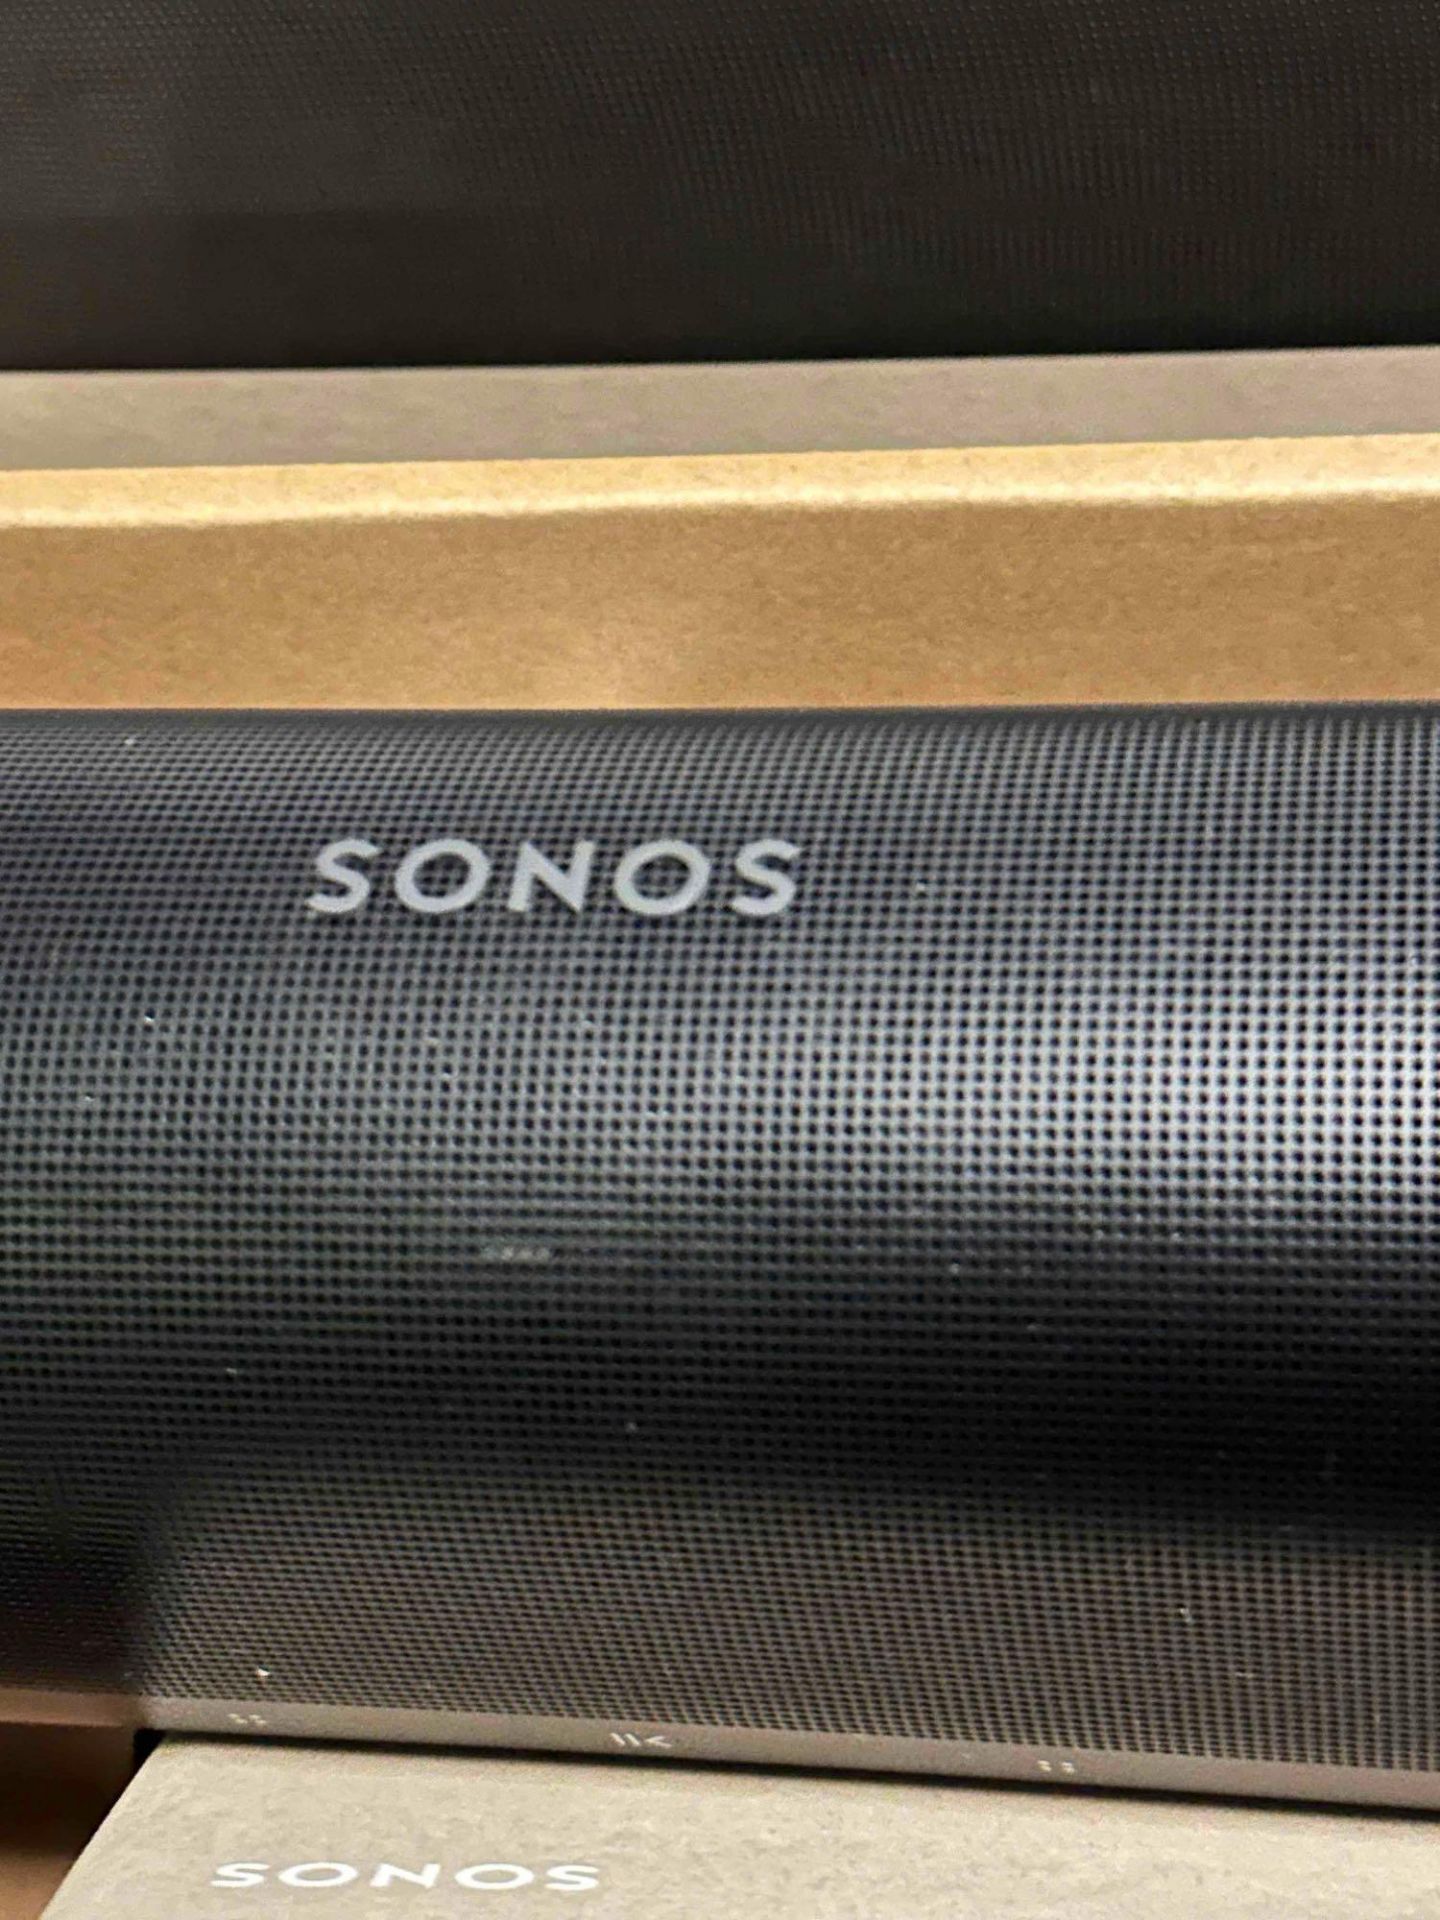 Sonos Arc Soundbarblack Elegant Design With Its Elongated Shape And Soft Profile,The Sonos Arc - Image 2 of 2